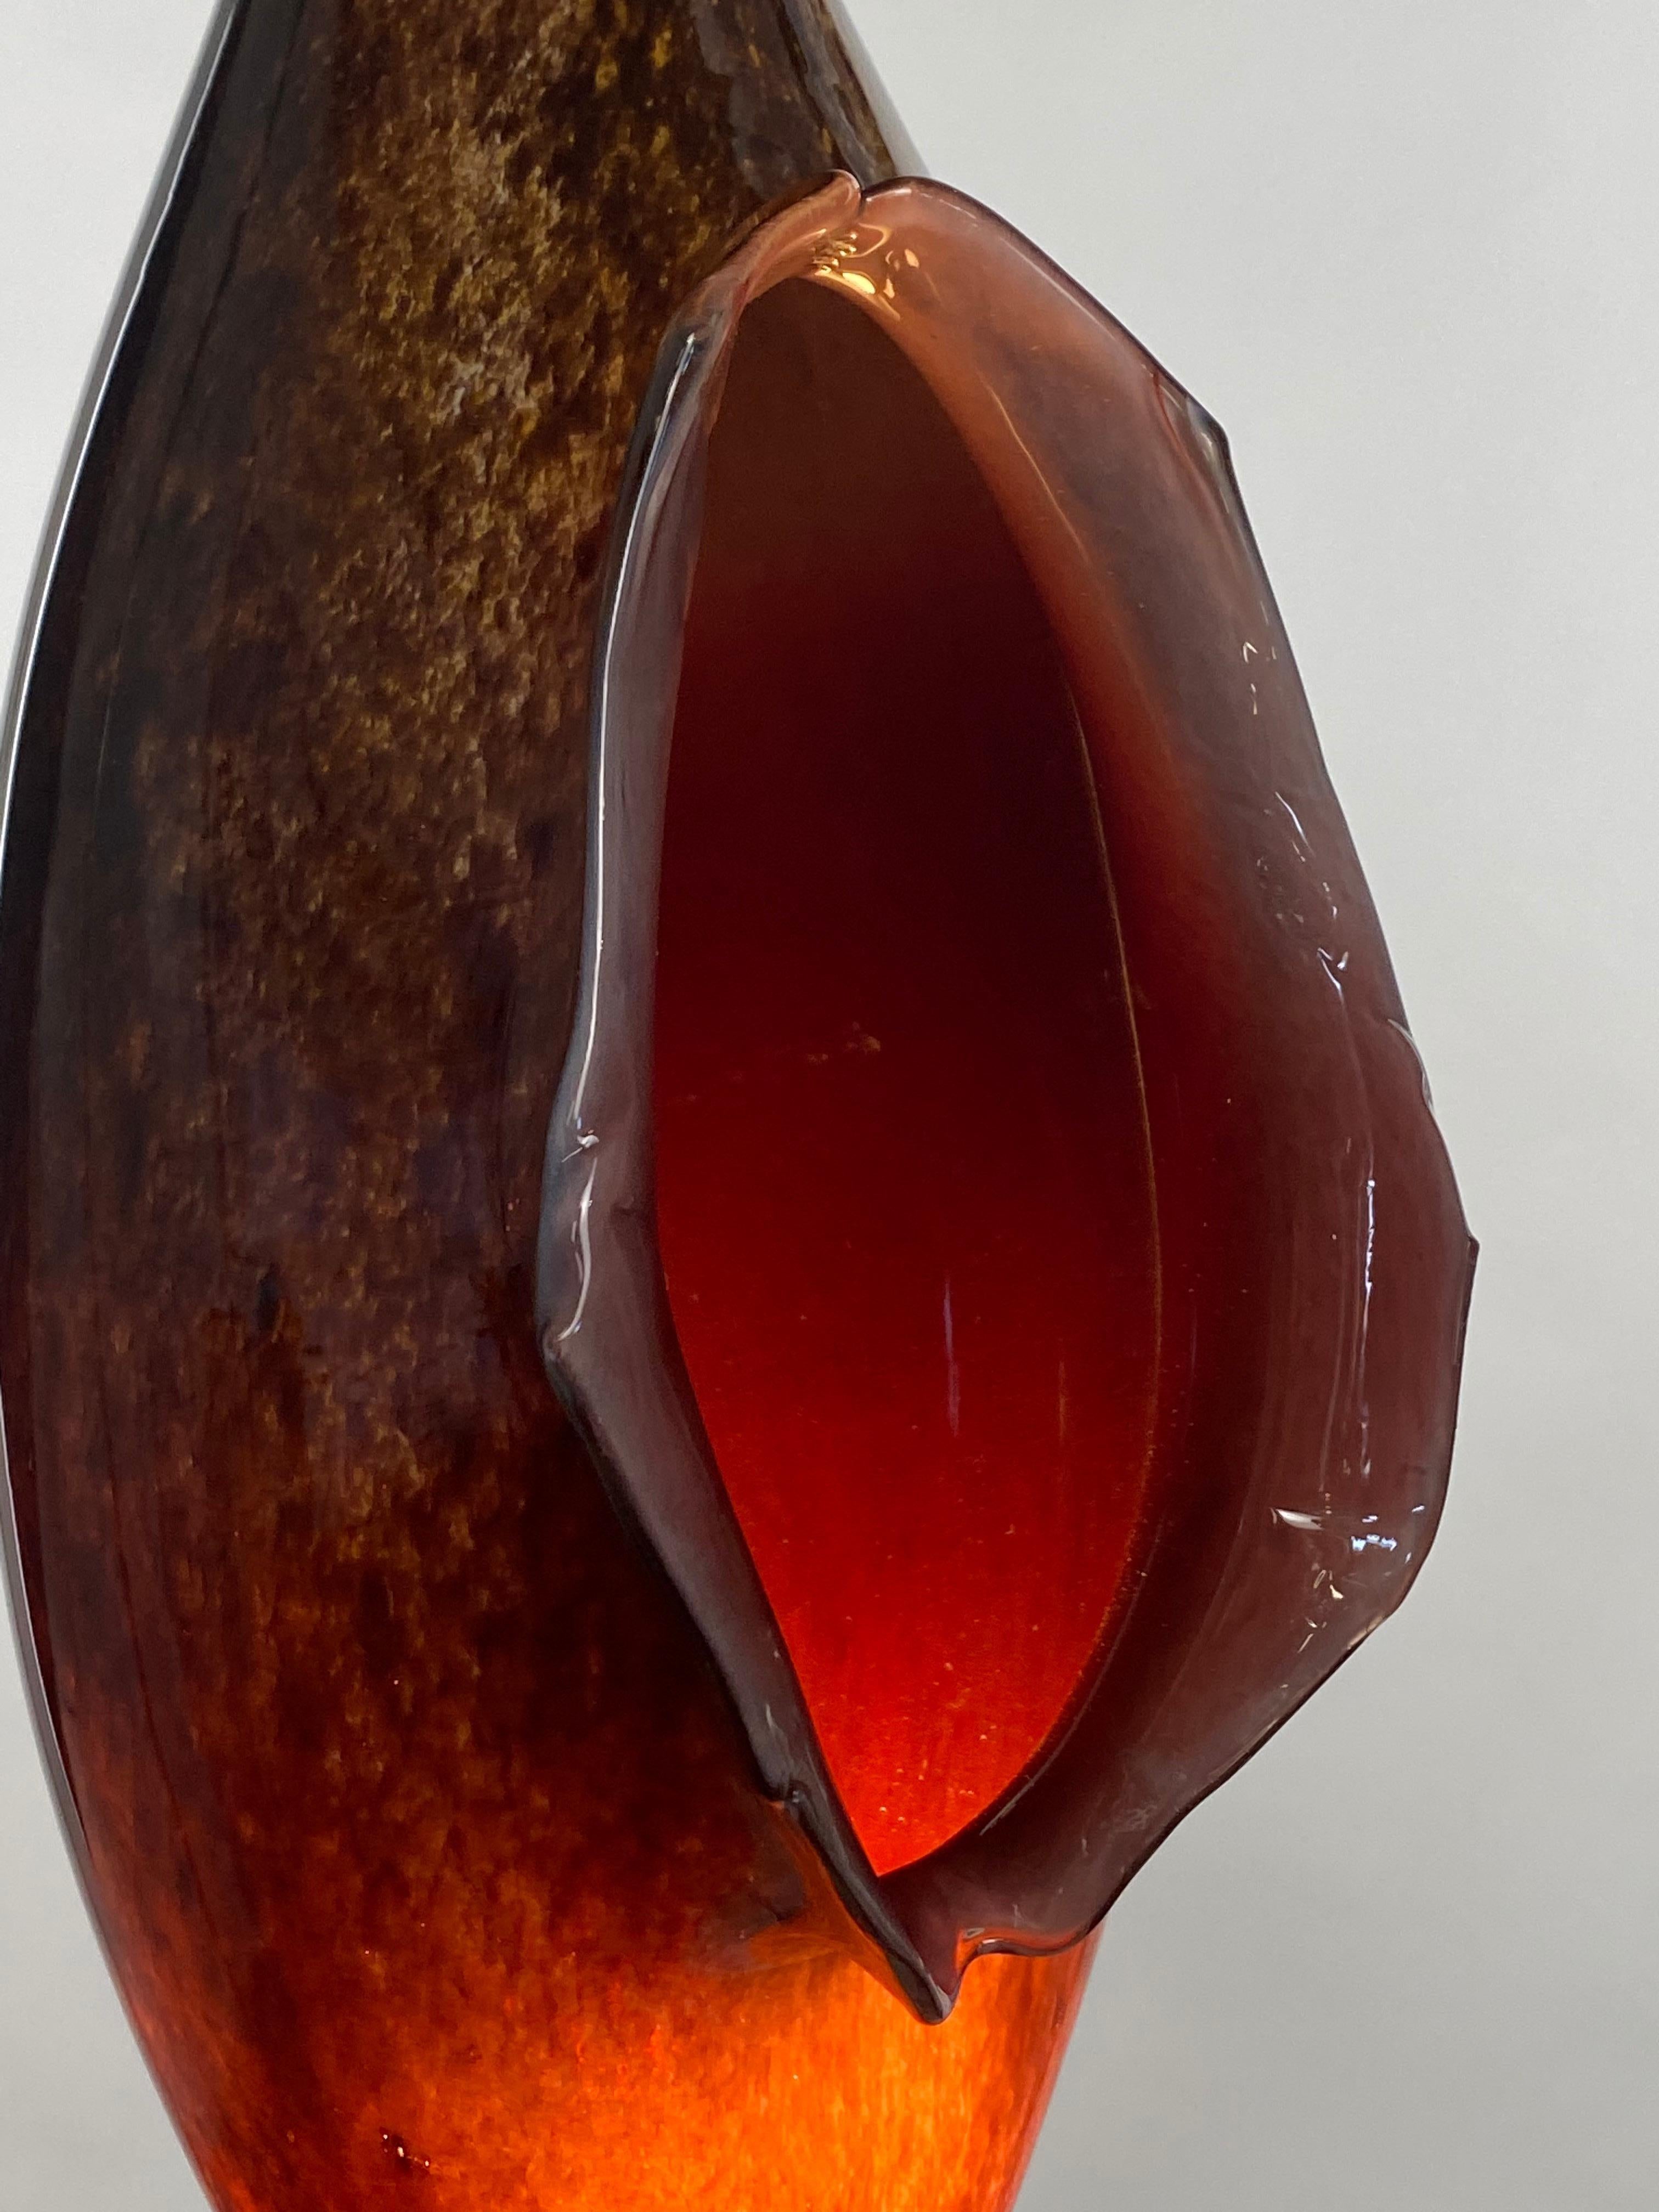 American Blown Glass Brown Orange Lamp Pendent Light, 21st Century by Mattia Biagi For Sale